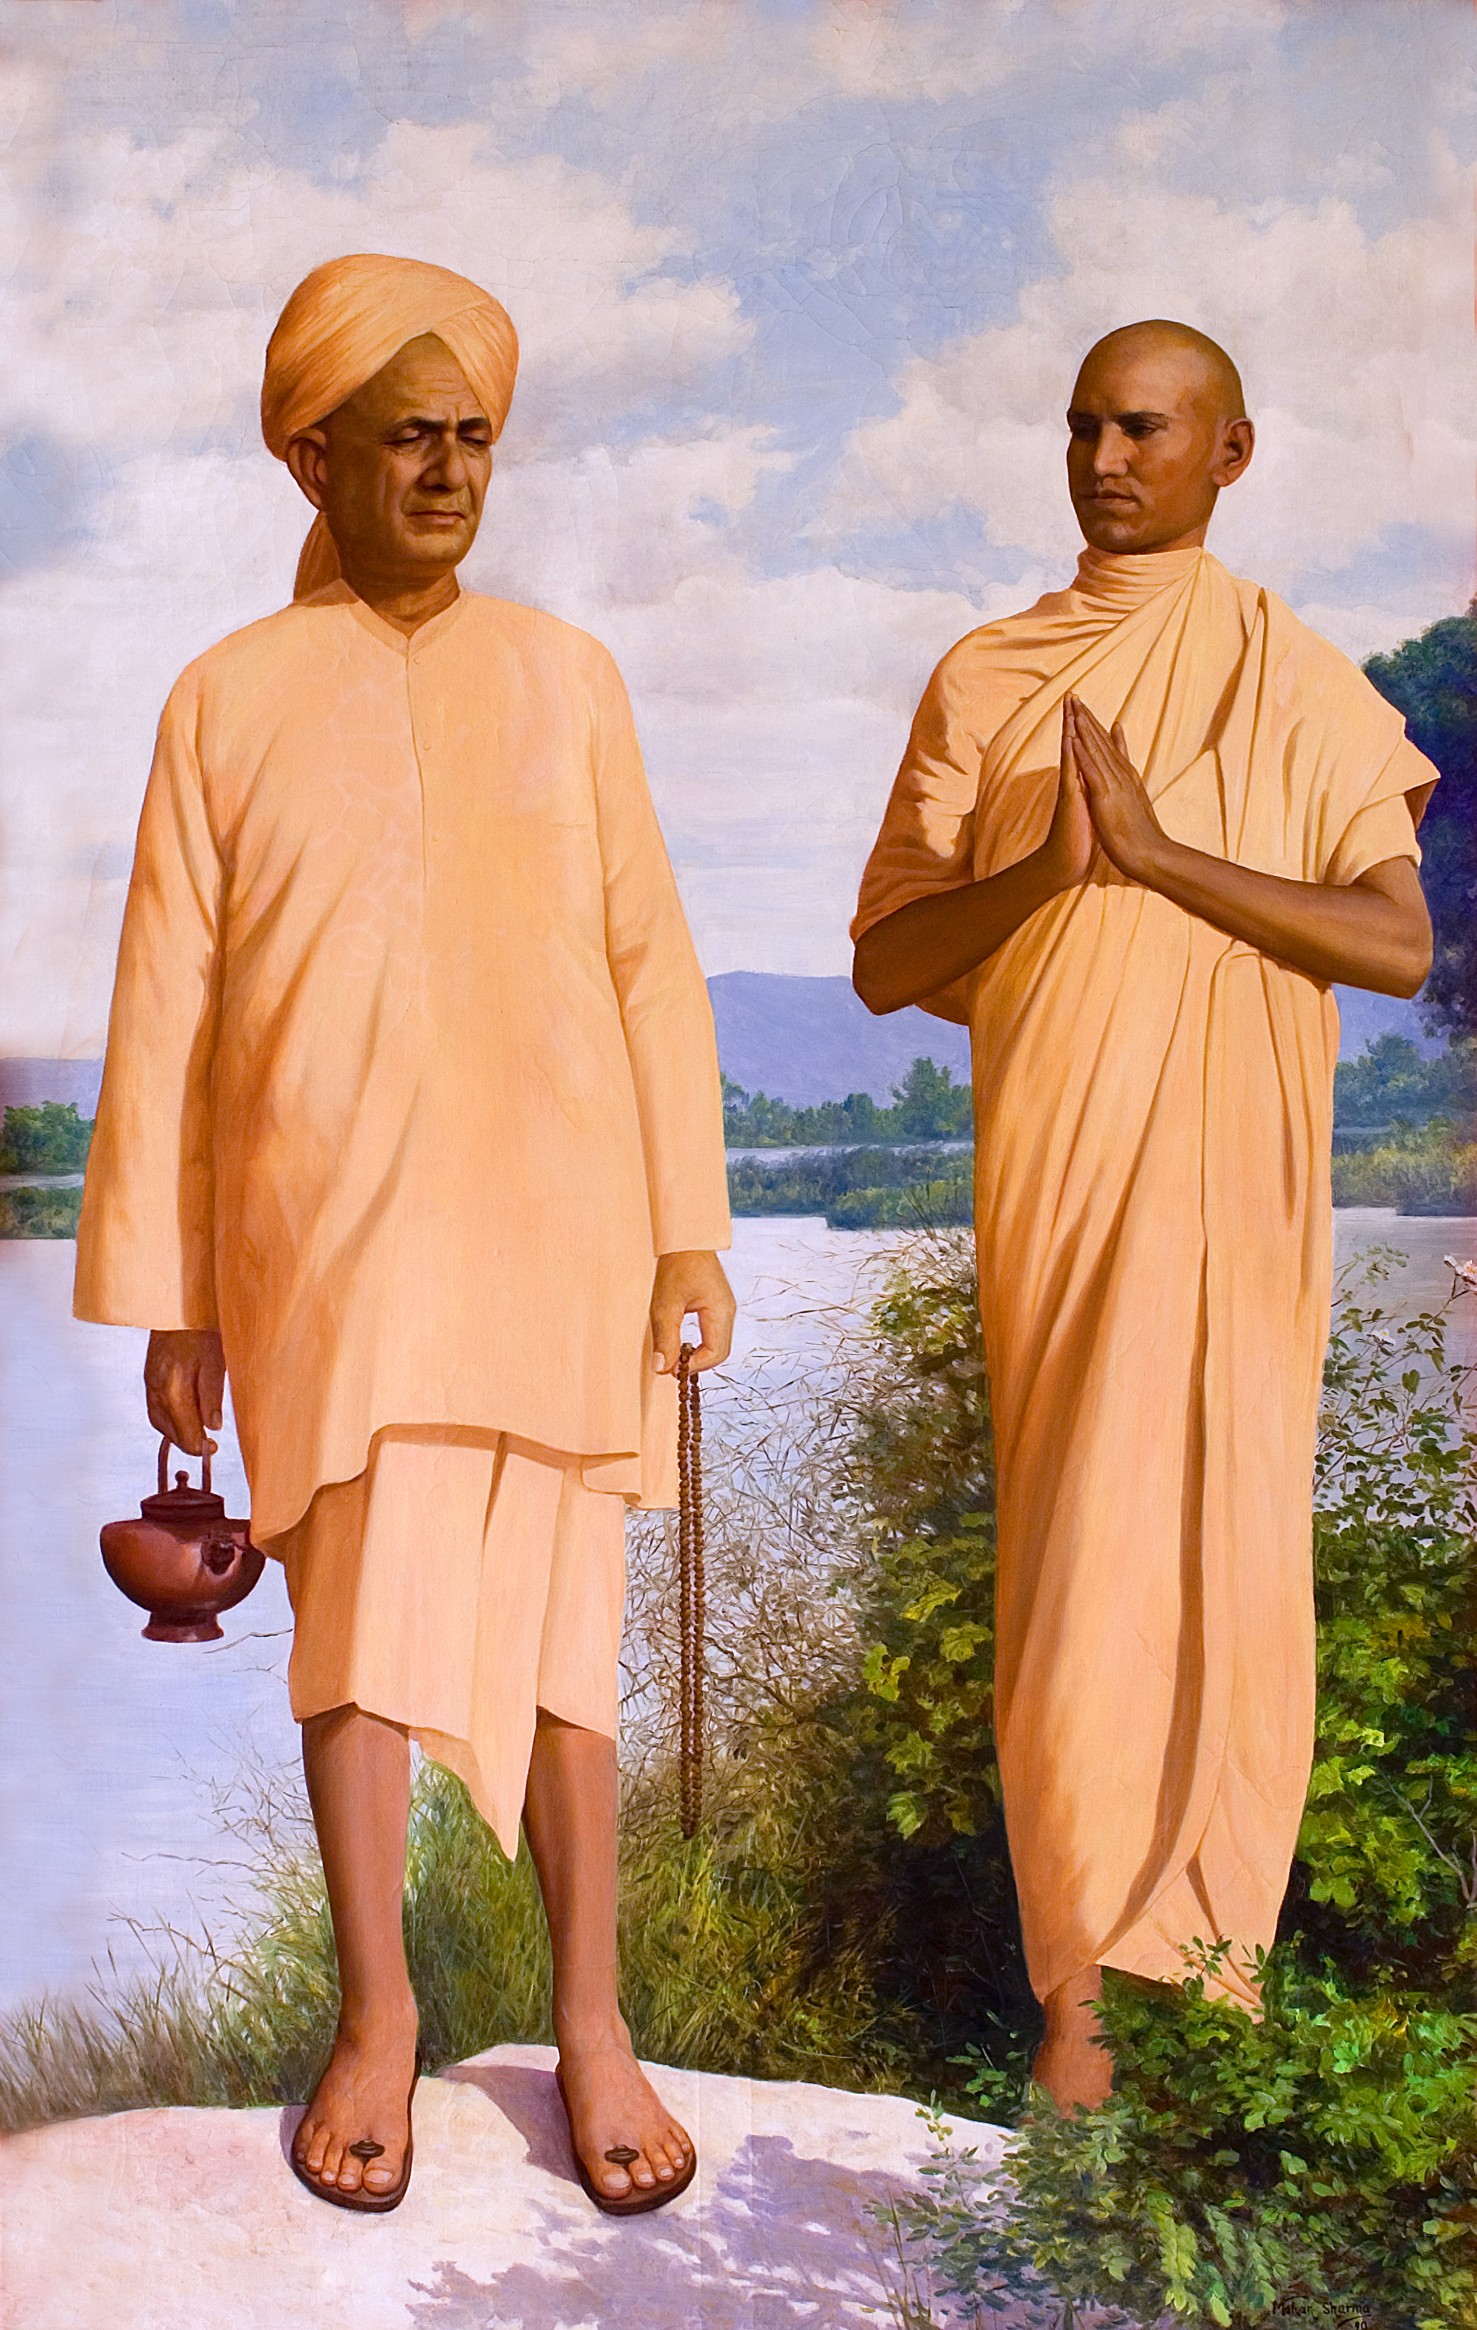 Bhagwan Sri Deep Narayan Mahaprabhuji and Paramhans Swami Madhavananda